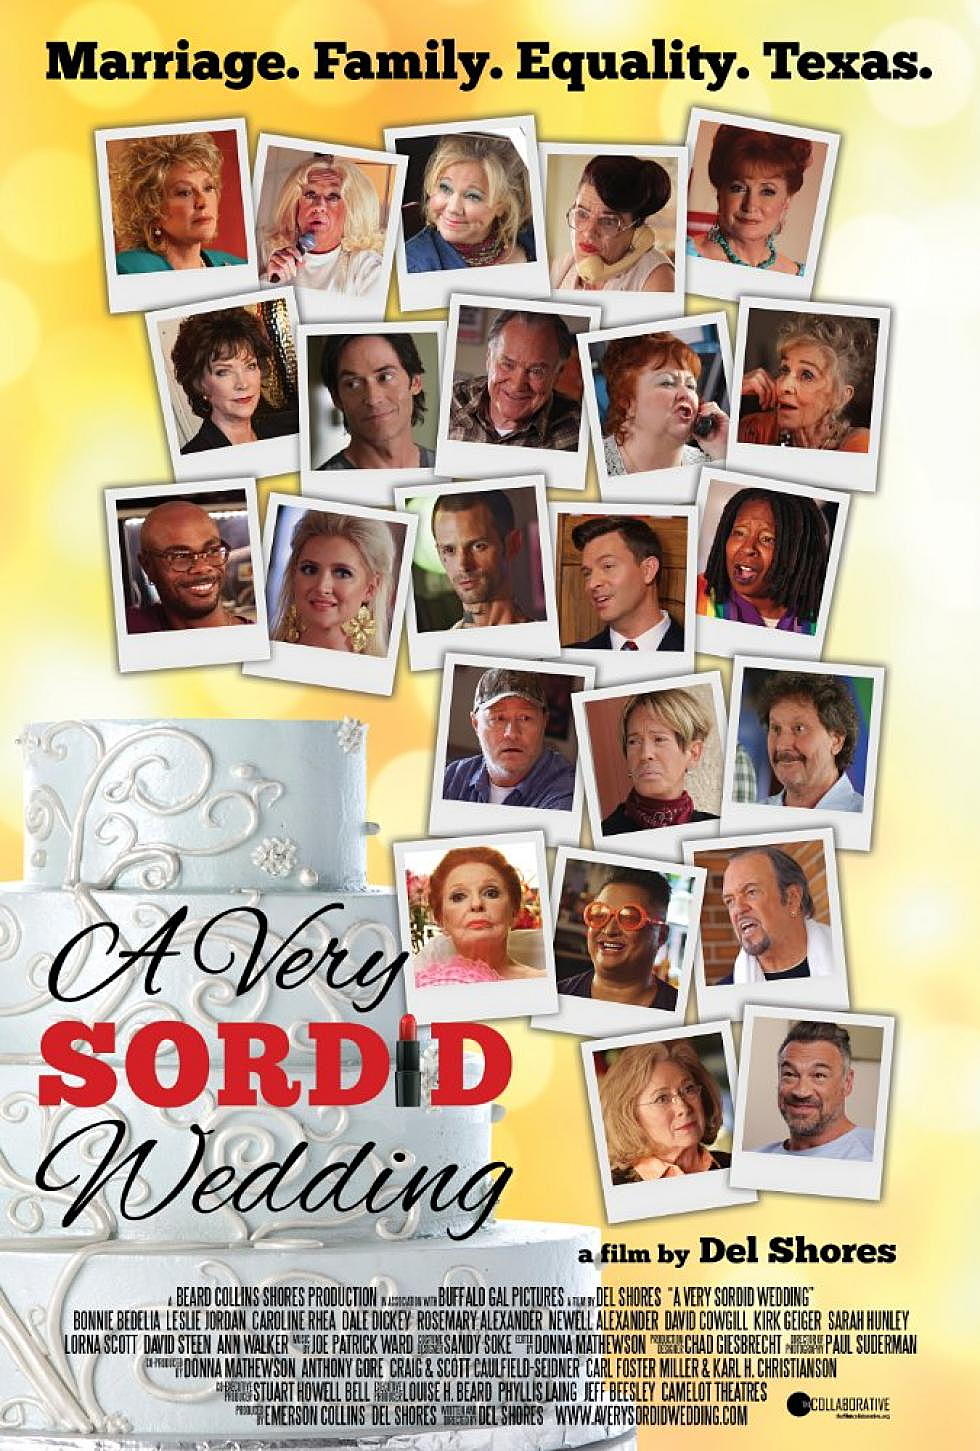 ‘A Very Sordid Wedding’ Gets a Special Screening in Lubbock